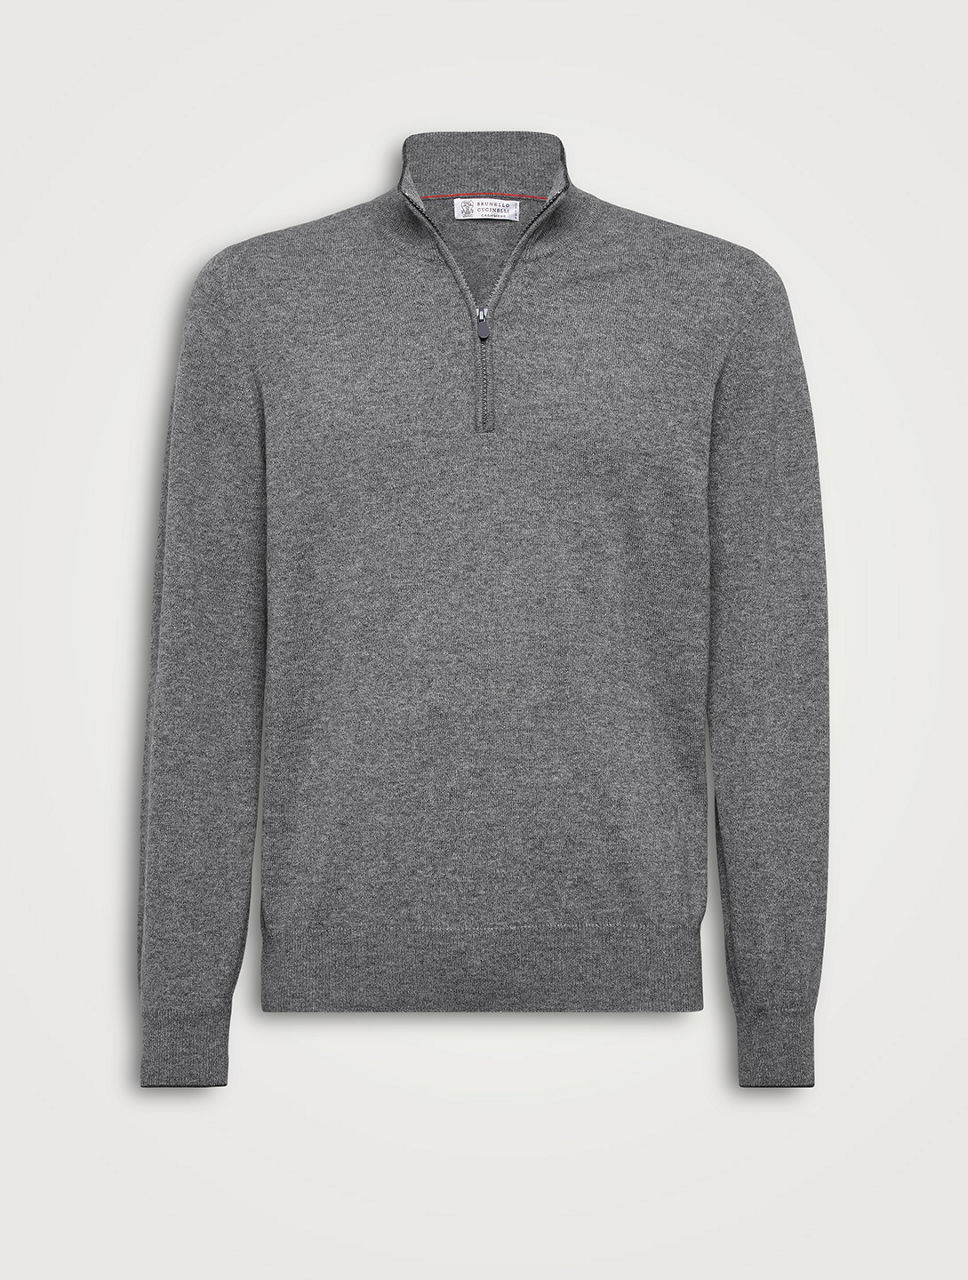 Men's Designer Turtleneck Sweaters